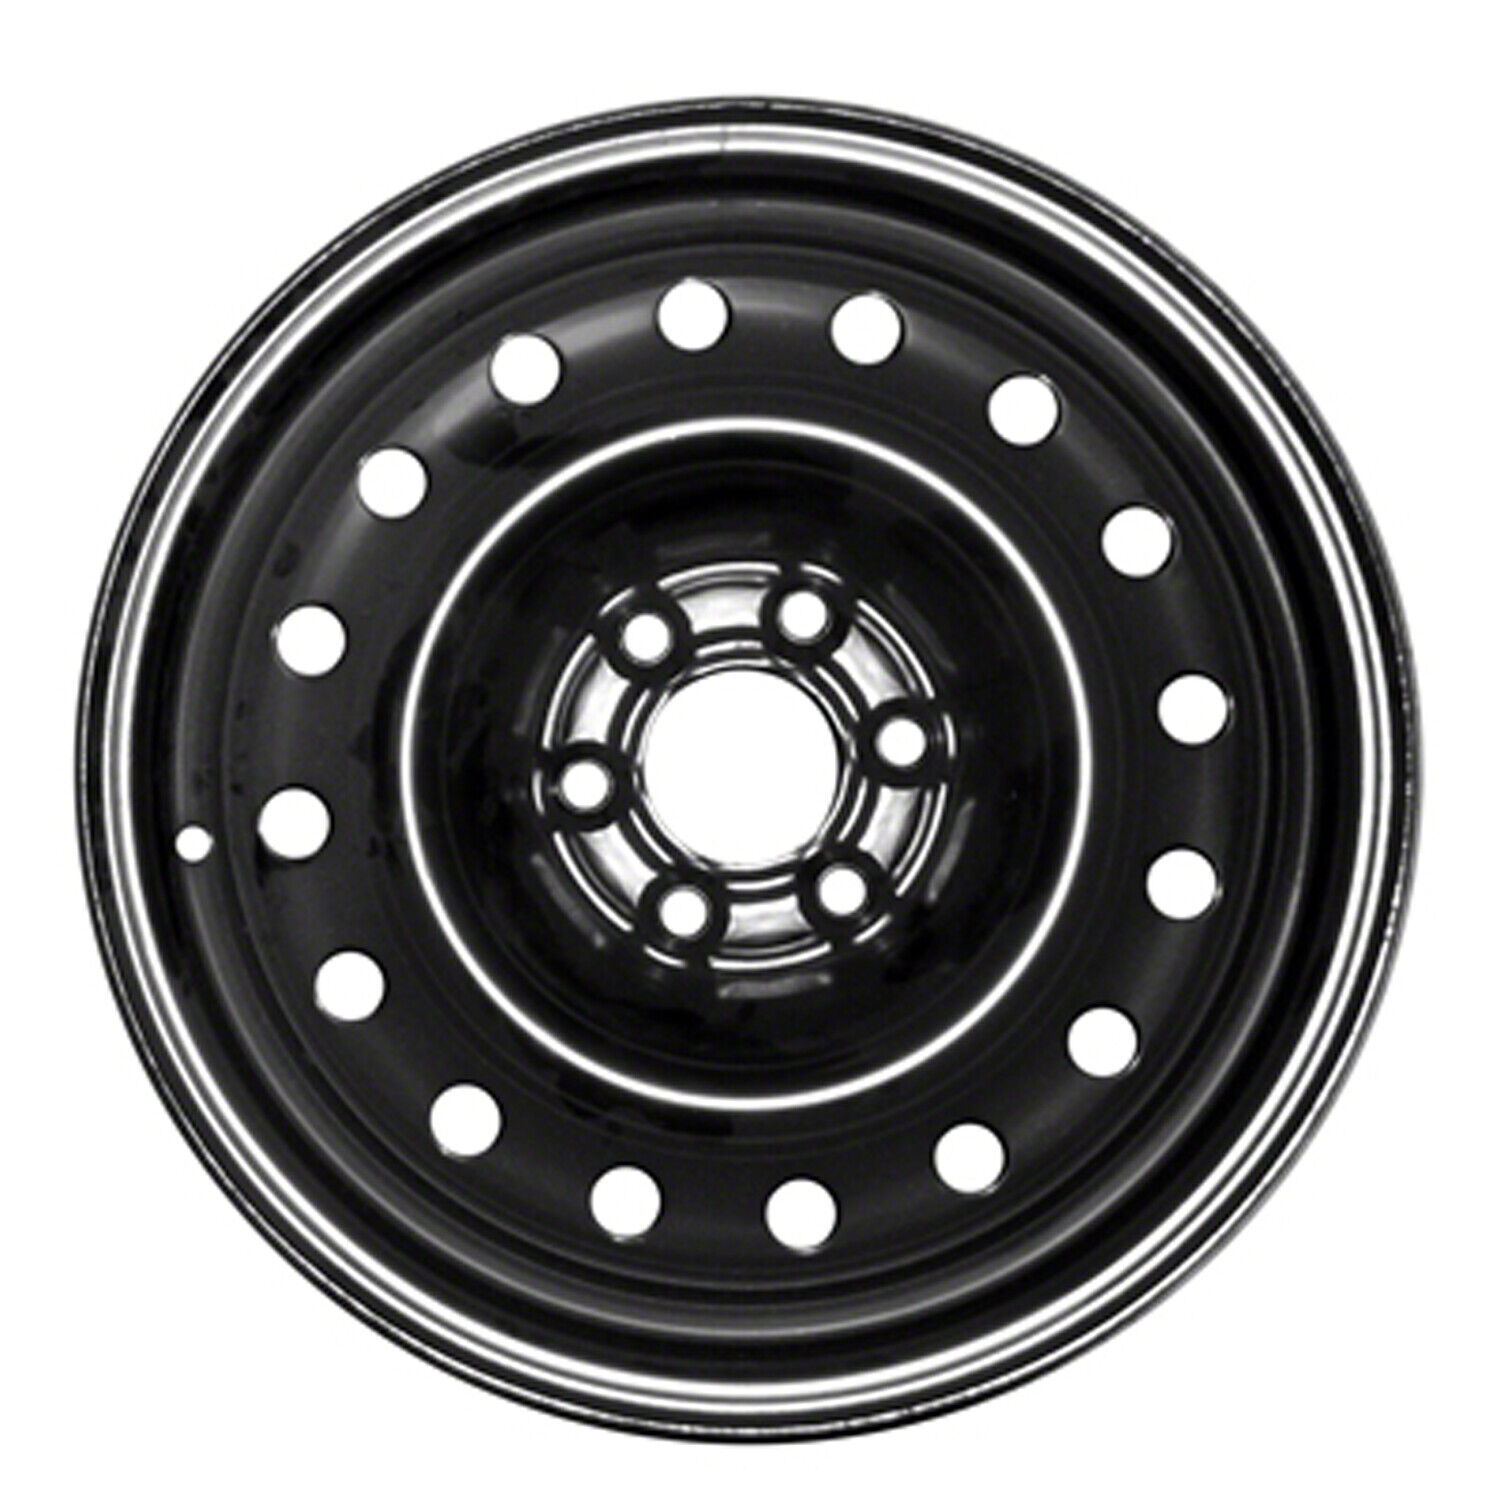 02190 Reconditioned OEM 16x7 Black Steel Wheel fits 2001-2004 Dodge Dakota